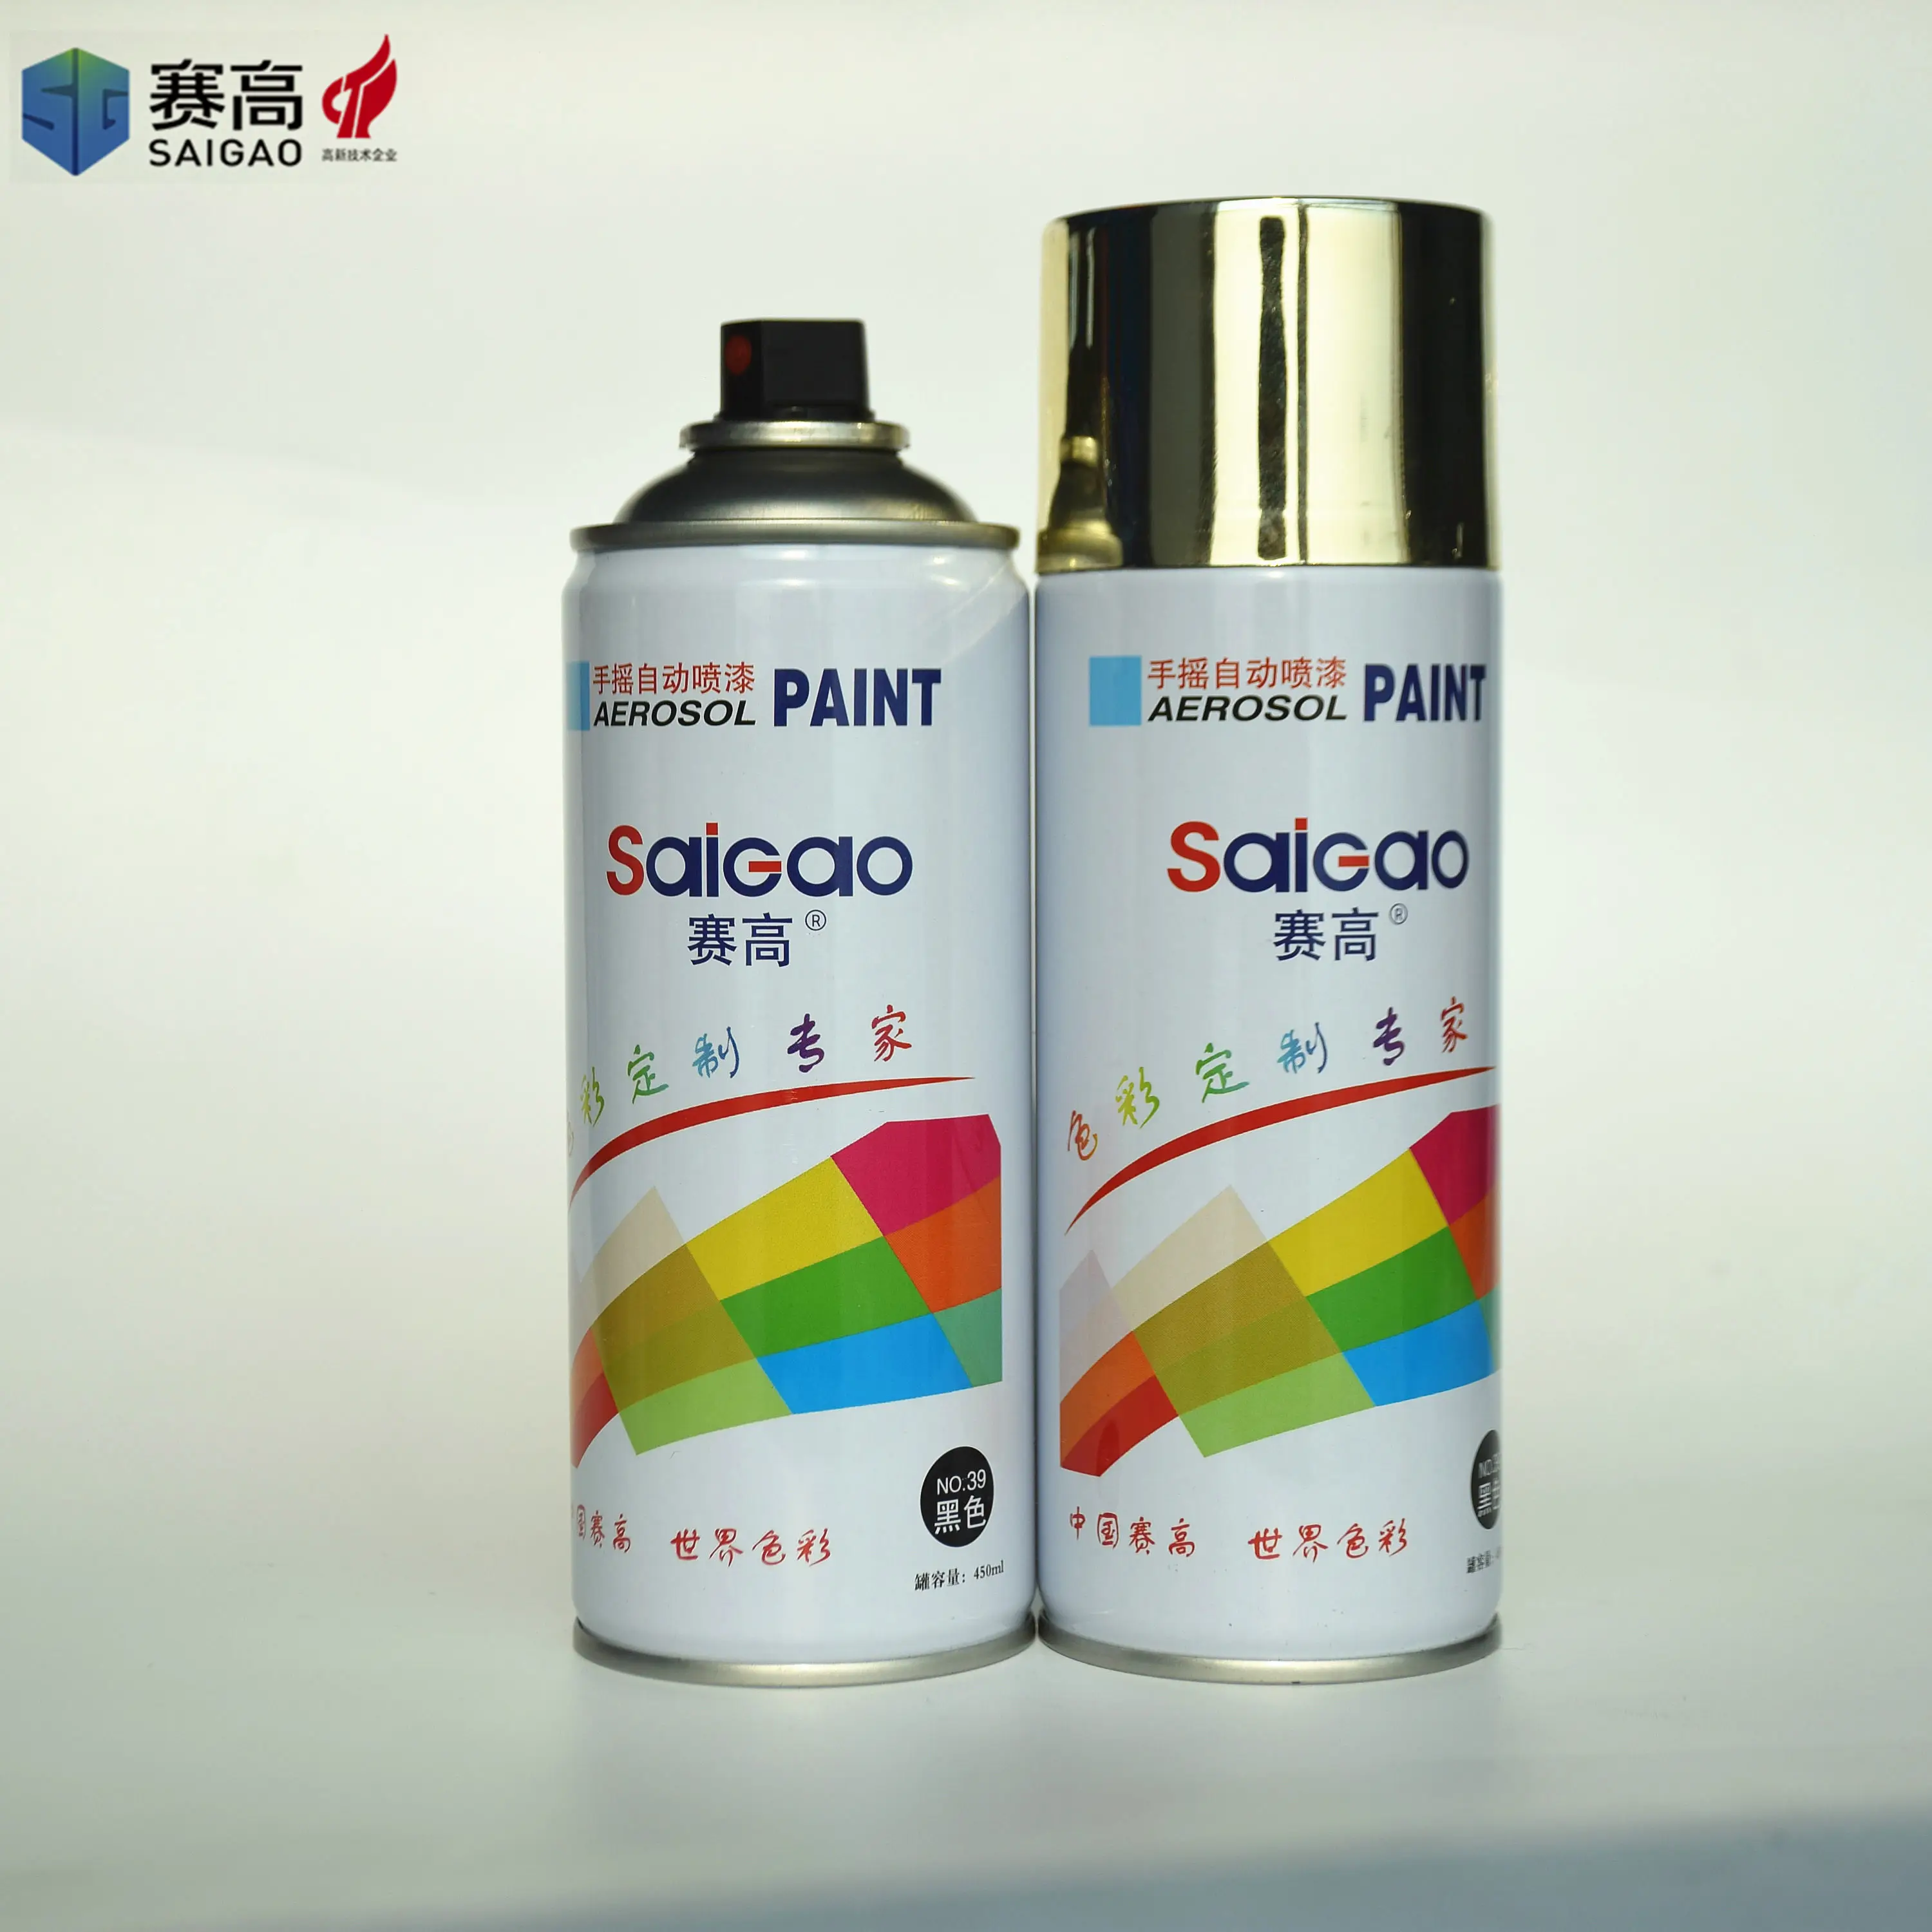 SAIGAO top coat spry matt spray paint